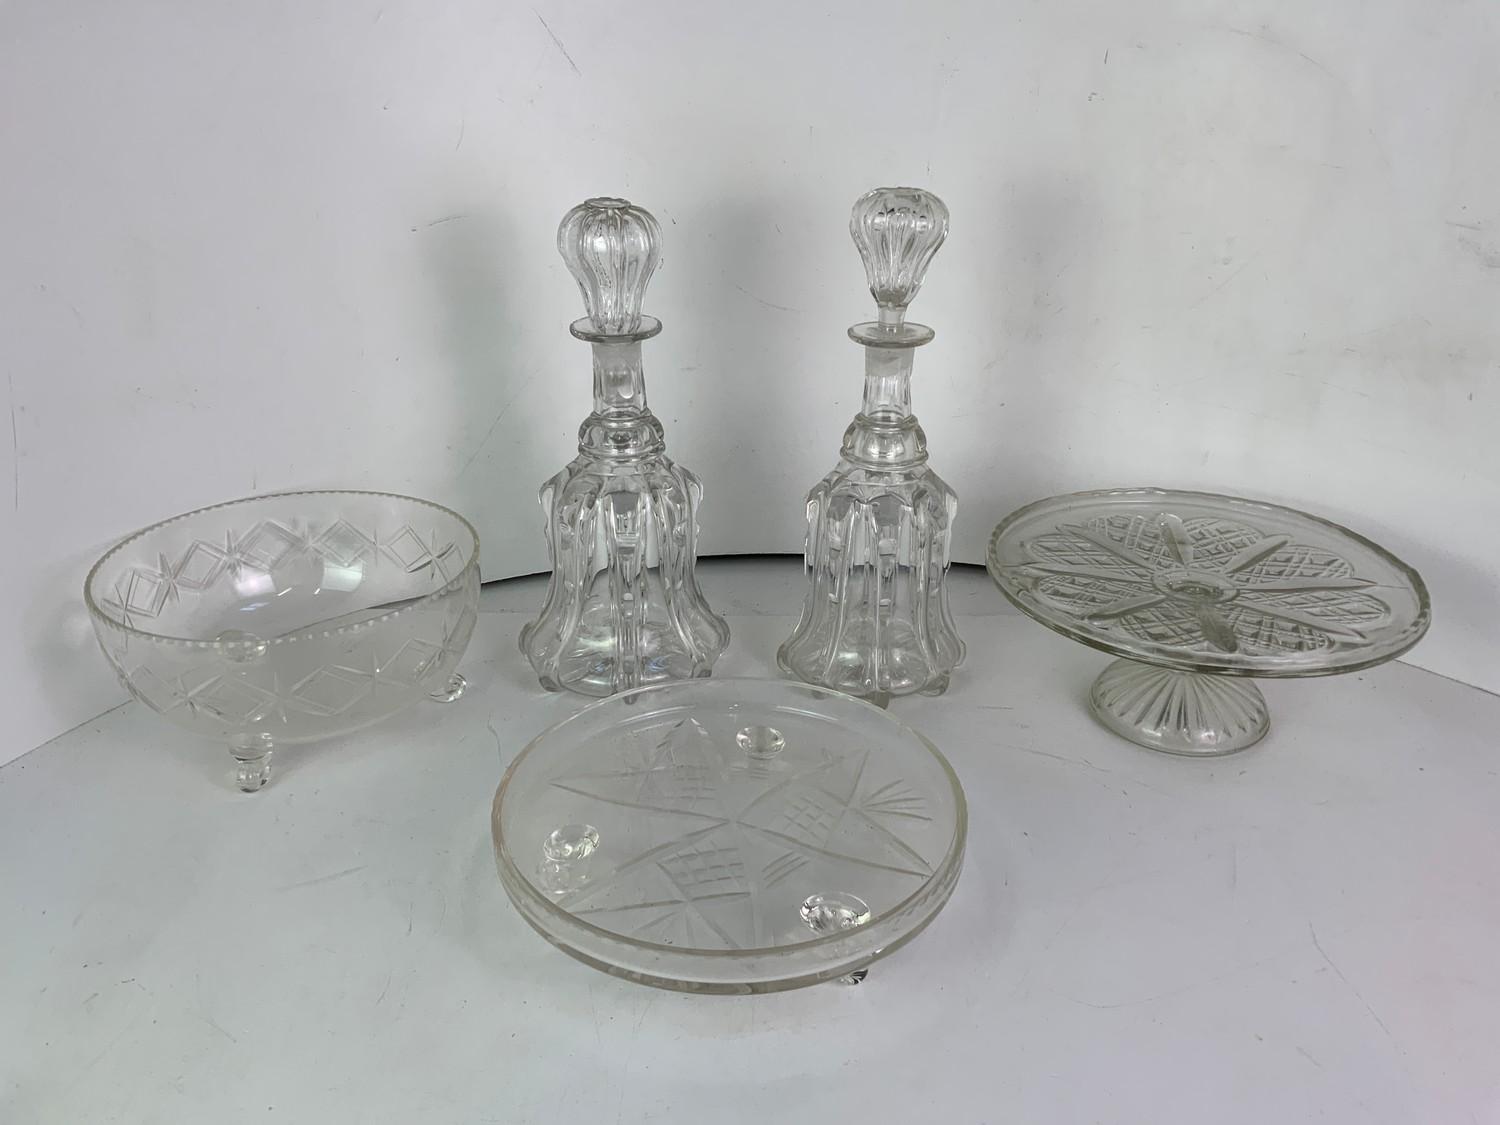 Glassware - Cake Stand, Decanters etc